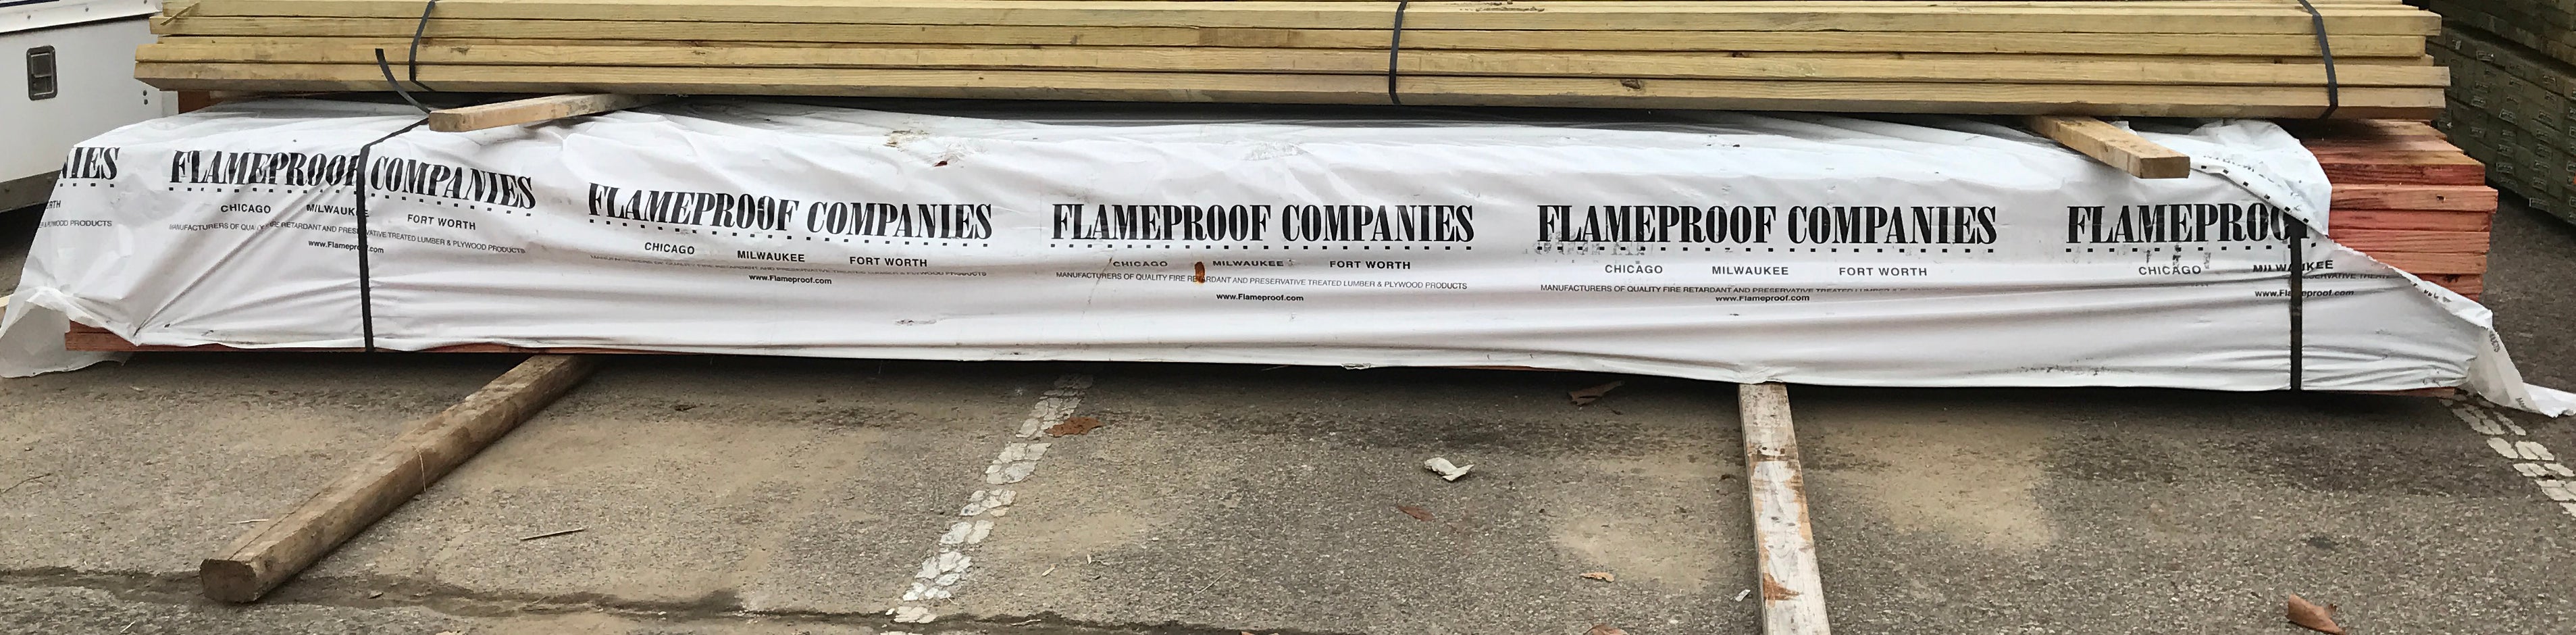 2"x6"x16' 64 Plank Bunk Flameproof Lumber